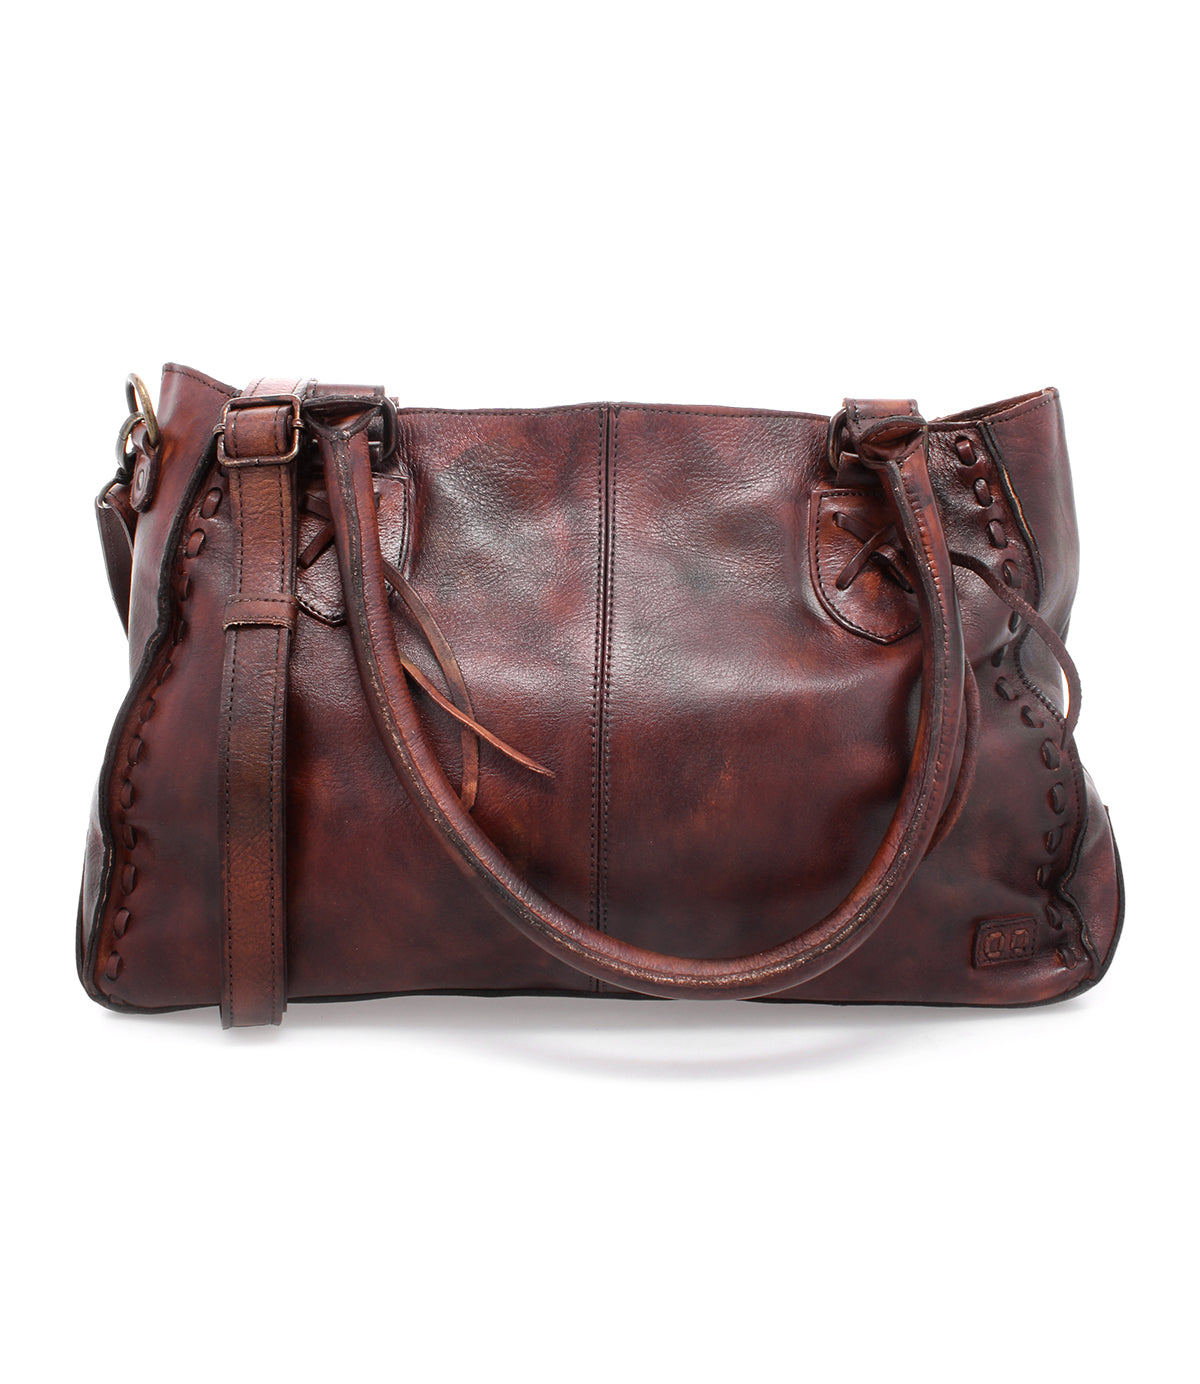 A Rockababy teak leather handbag by Bed Stu.